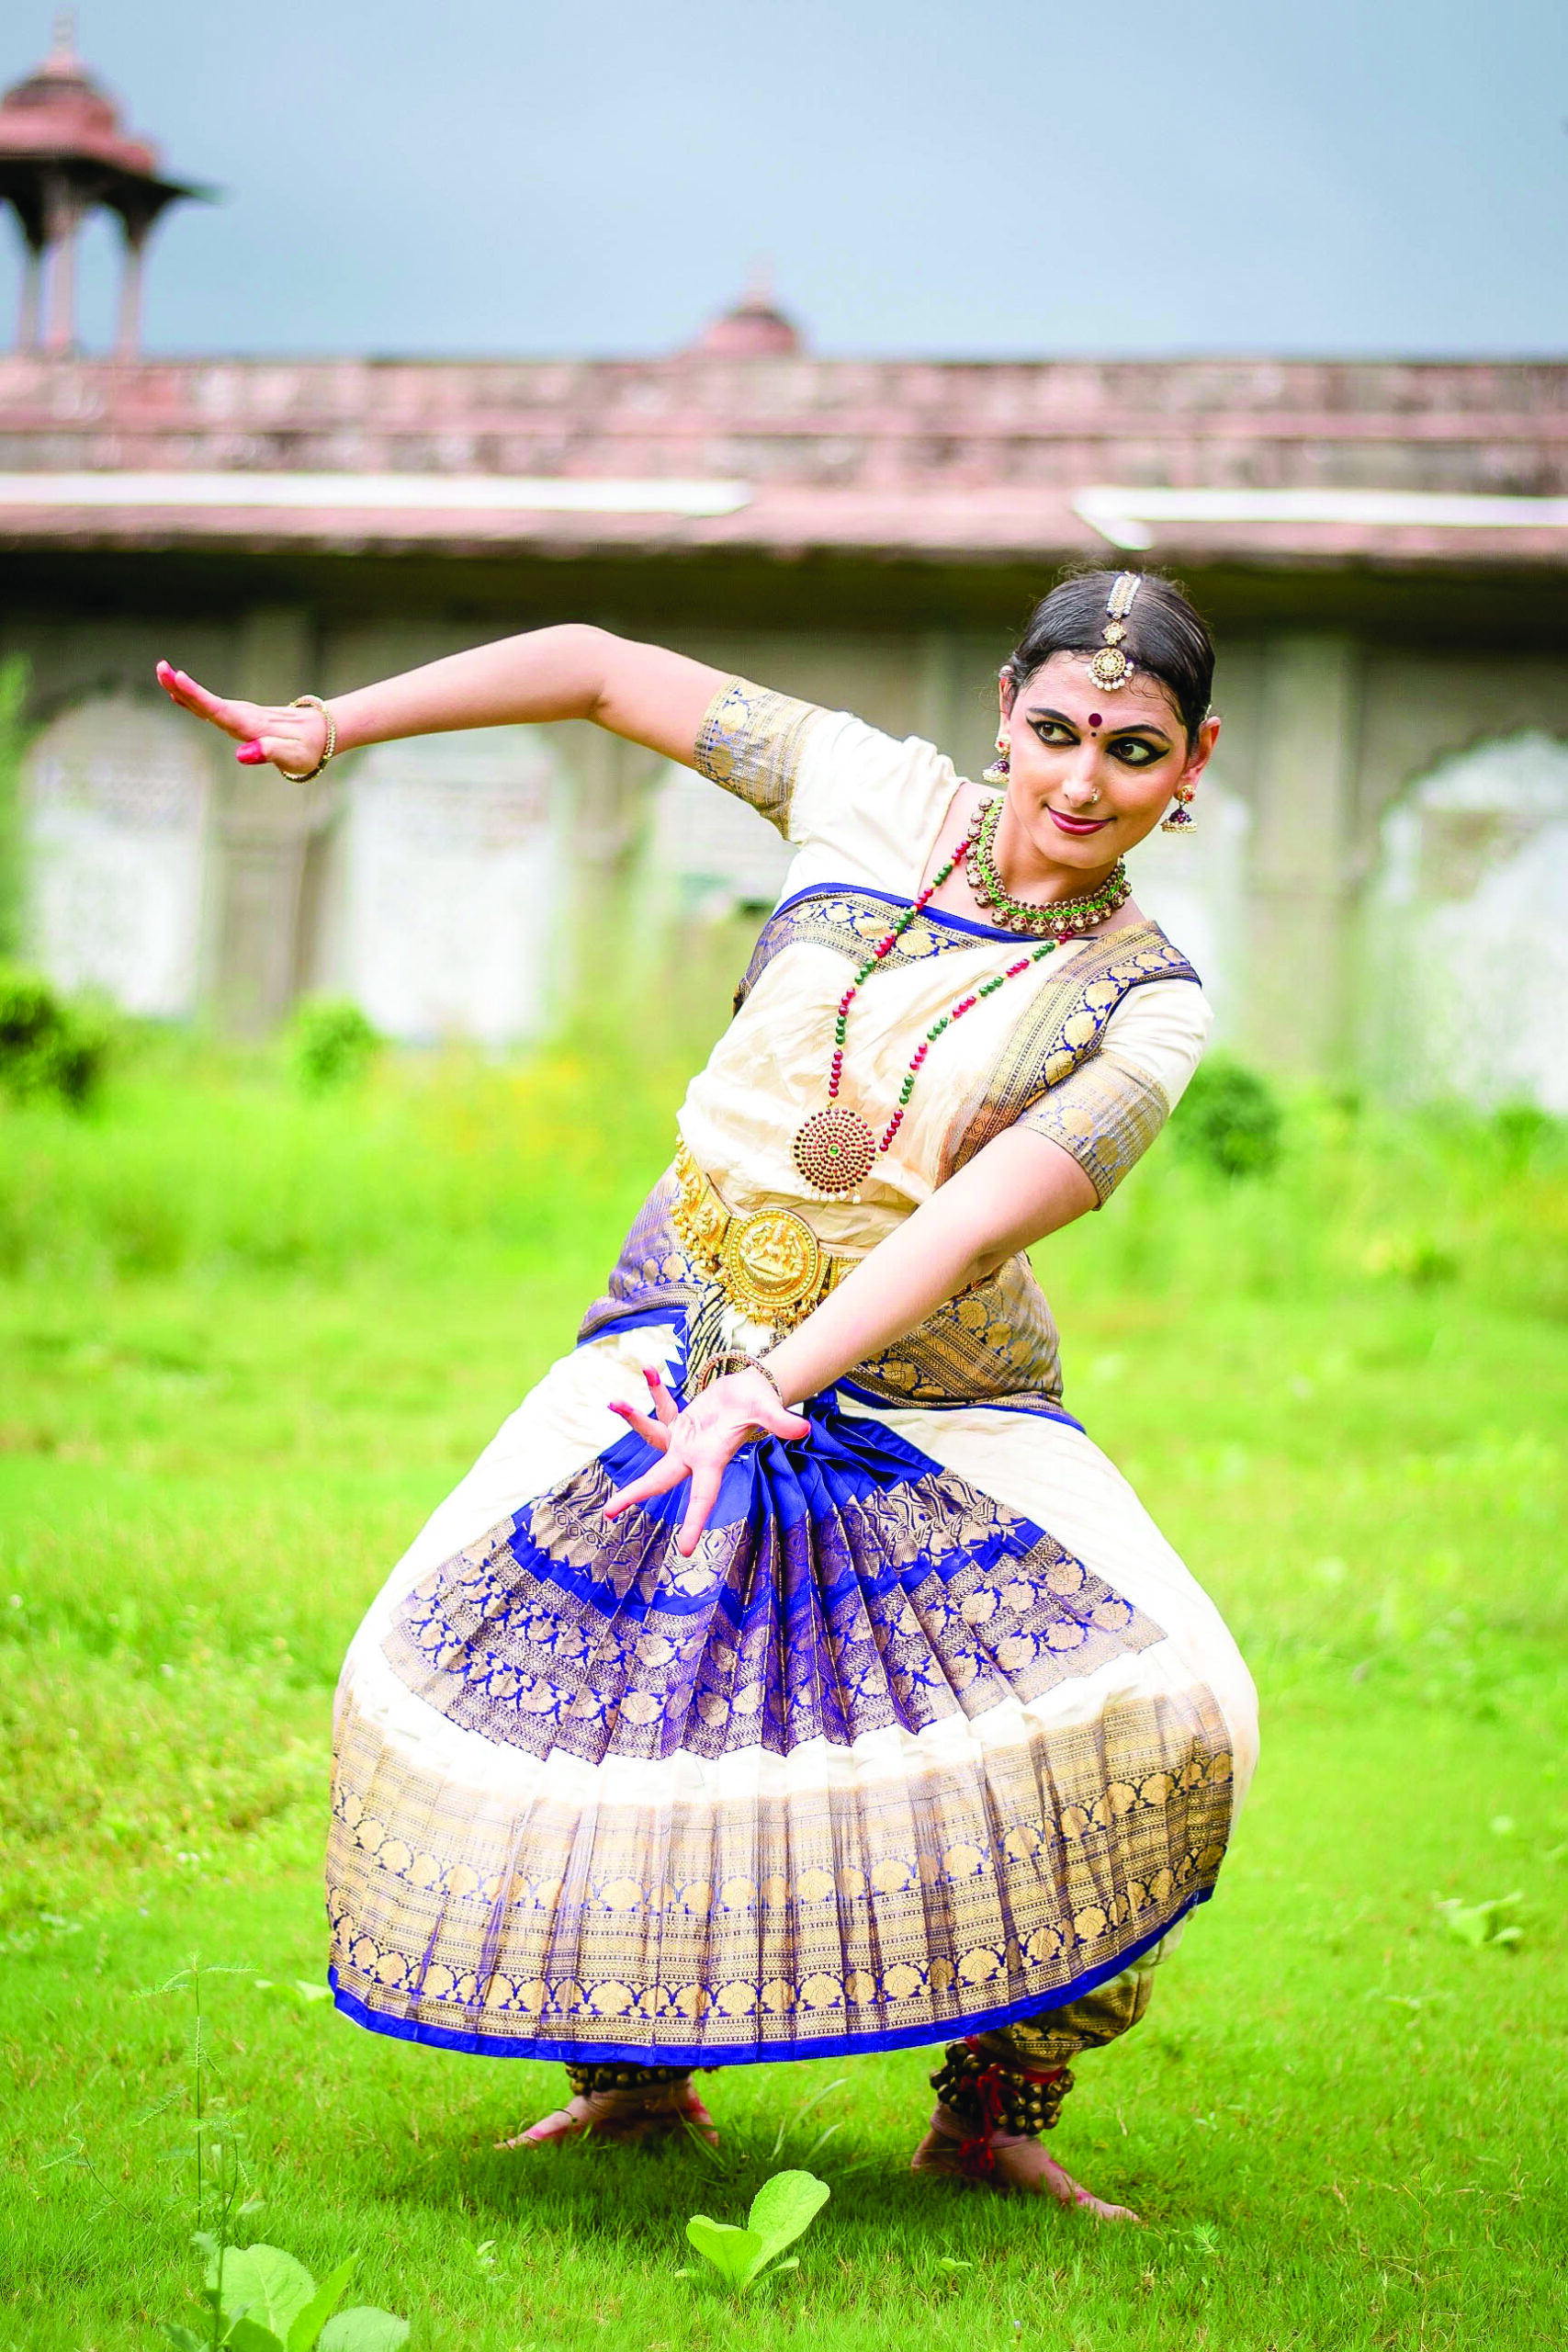 Apeksha Niranjan’s cultural journey of harmony & expression